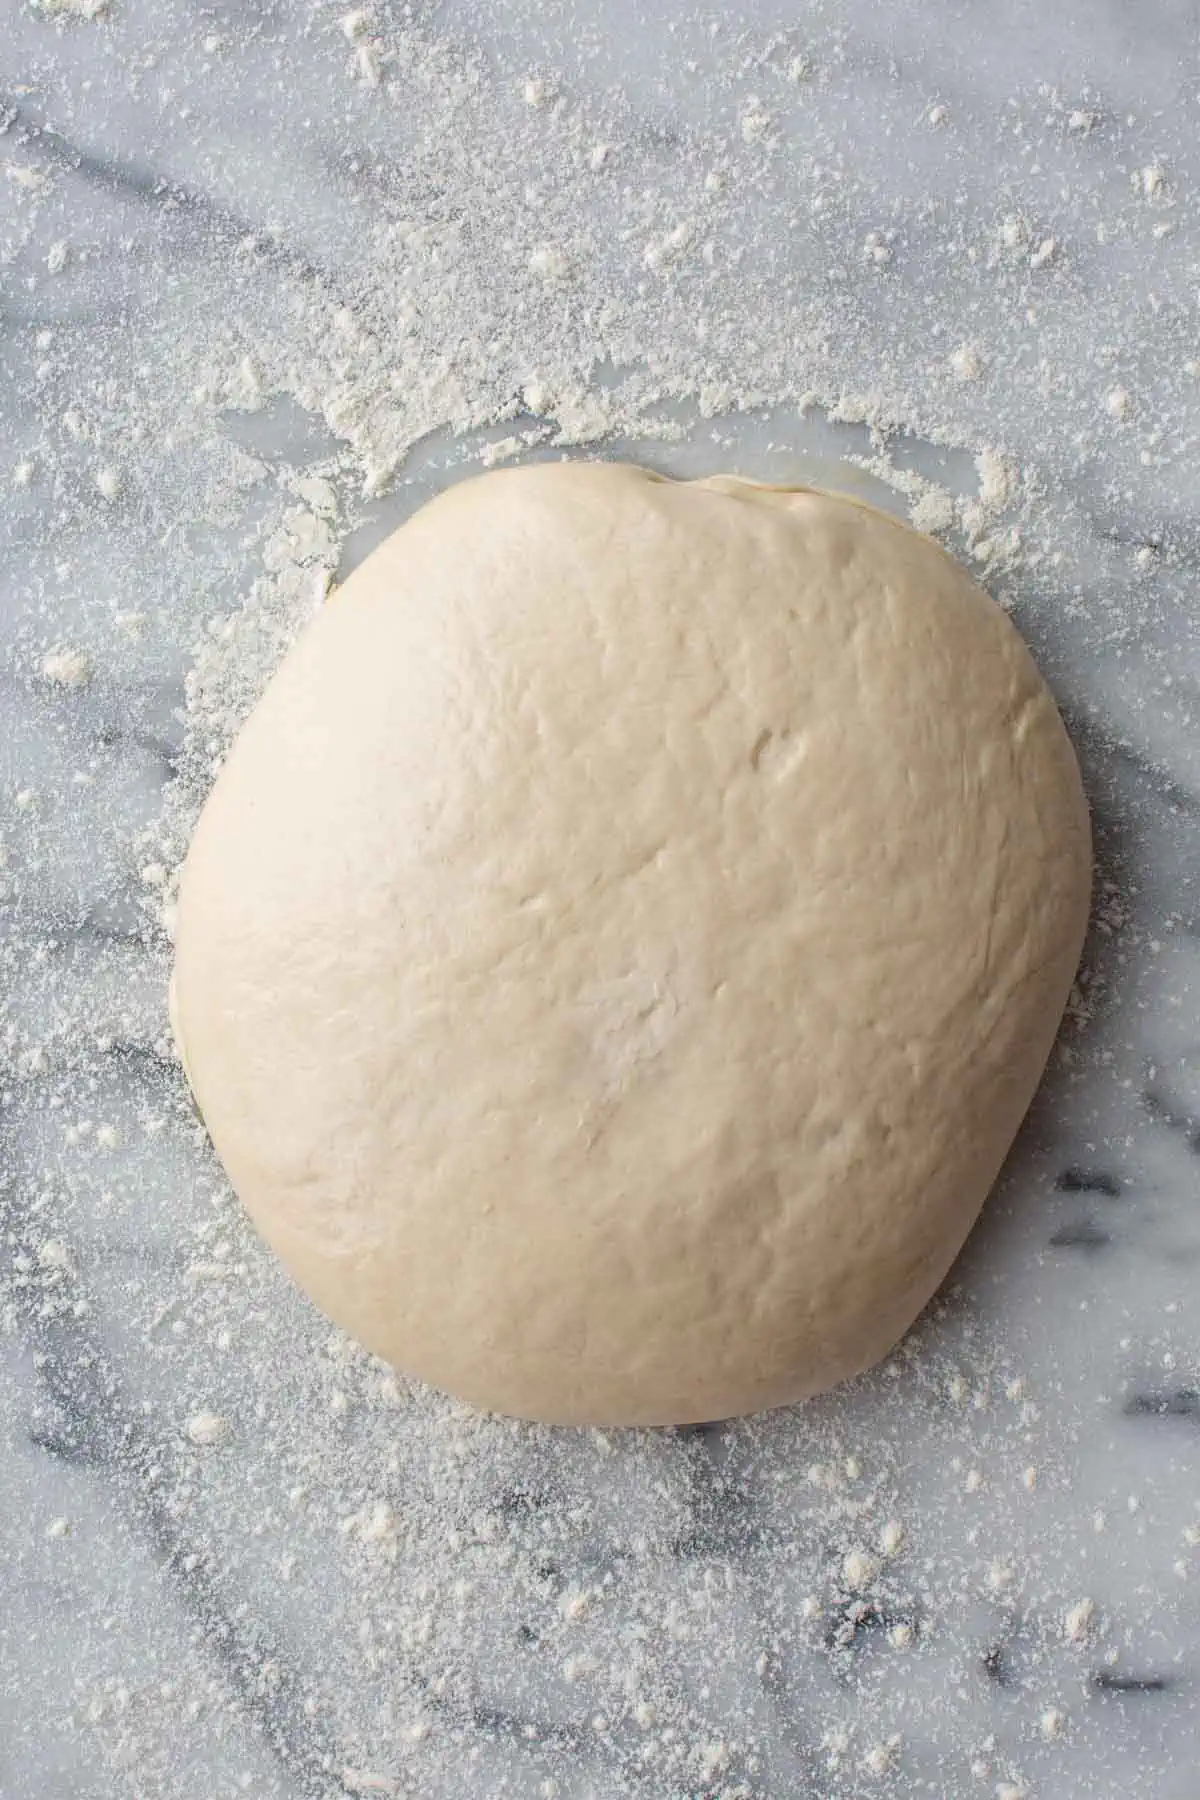 Homemade, authentic Neapolitan pizza dough recipe.